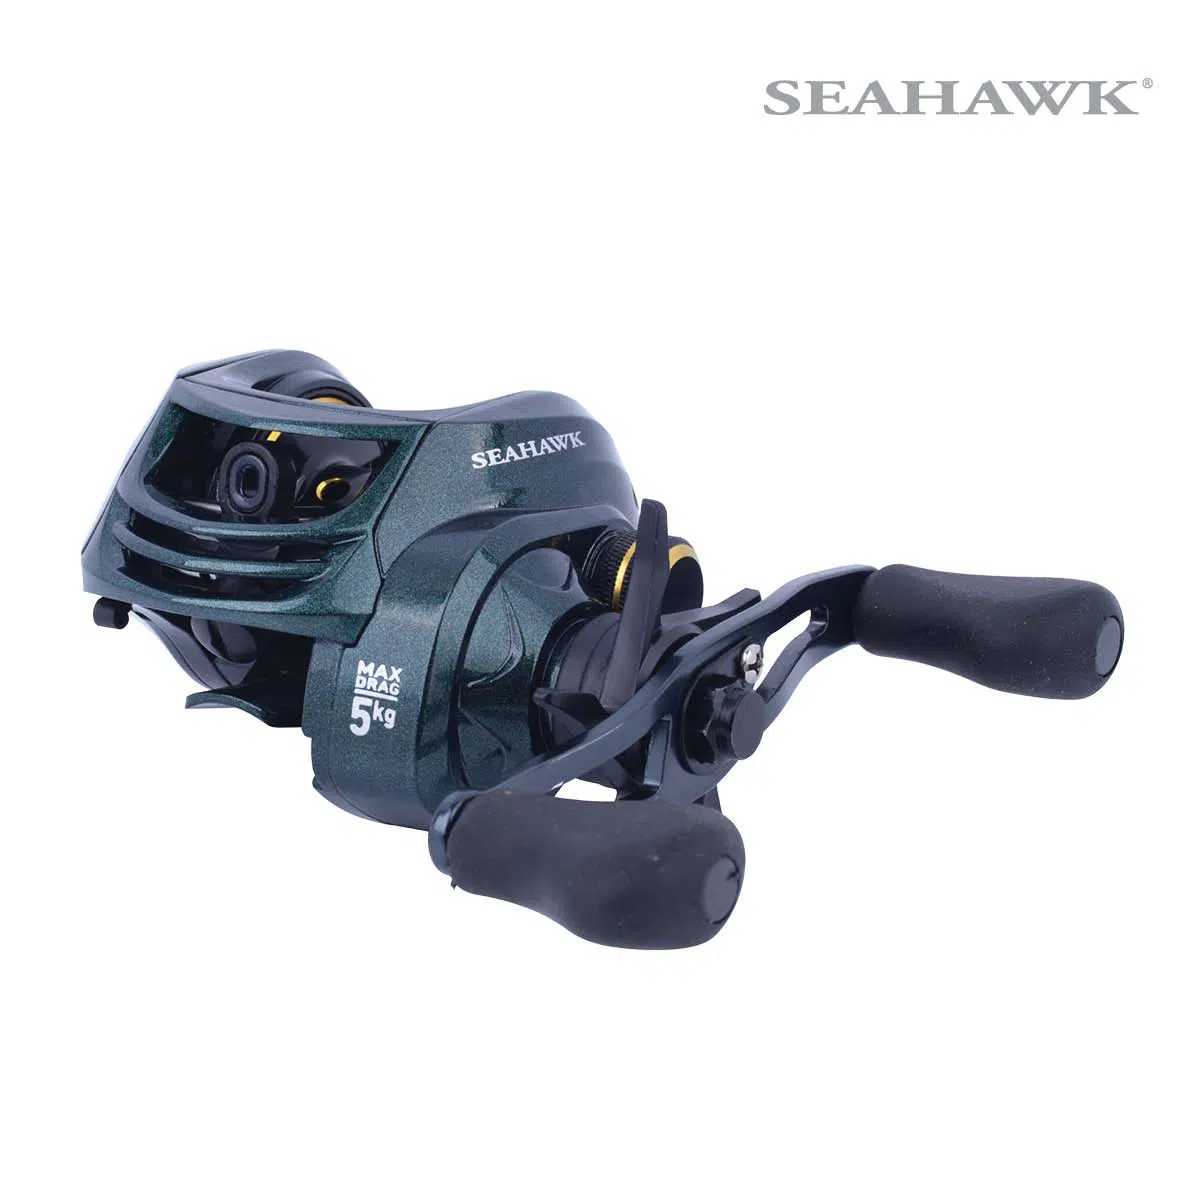 https://seahawkfishing.com/wp-content/uploads/2021/07/Seahawk-Patriot-PT-01.jpg.webp